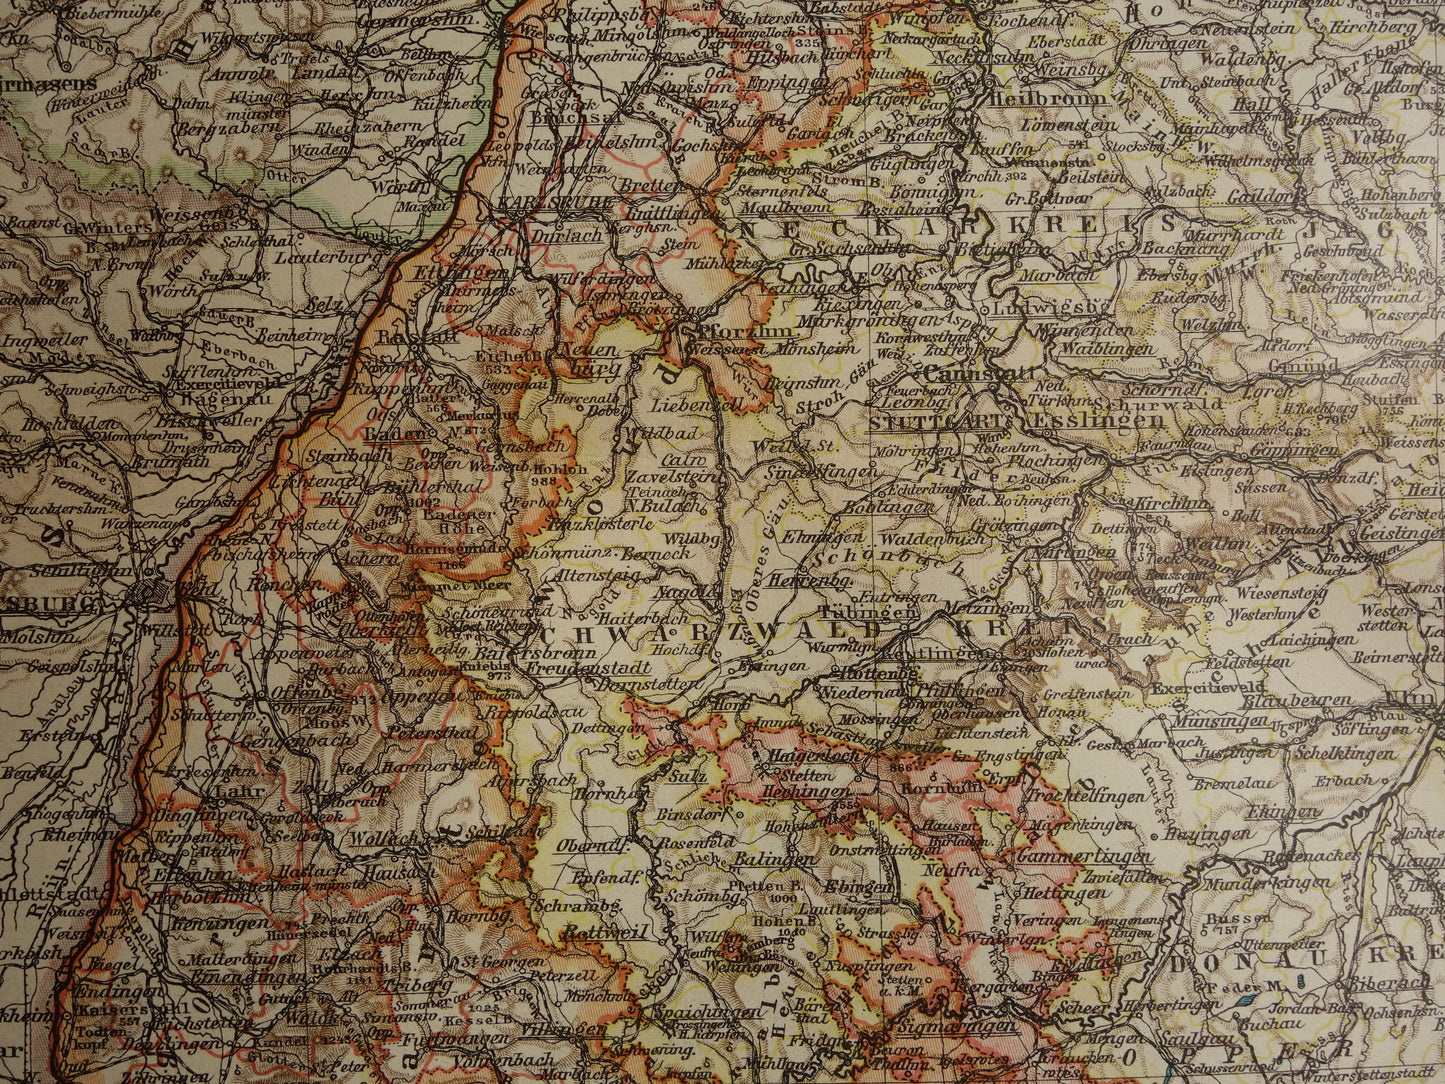 Oude kaart van Baden Hohenzollern Wurttemberg Duitsland 1905 originele antieke Nederlandse landkaart Stuttgart Karlsruhe